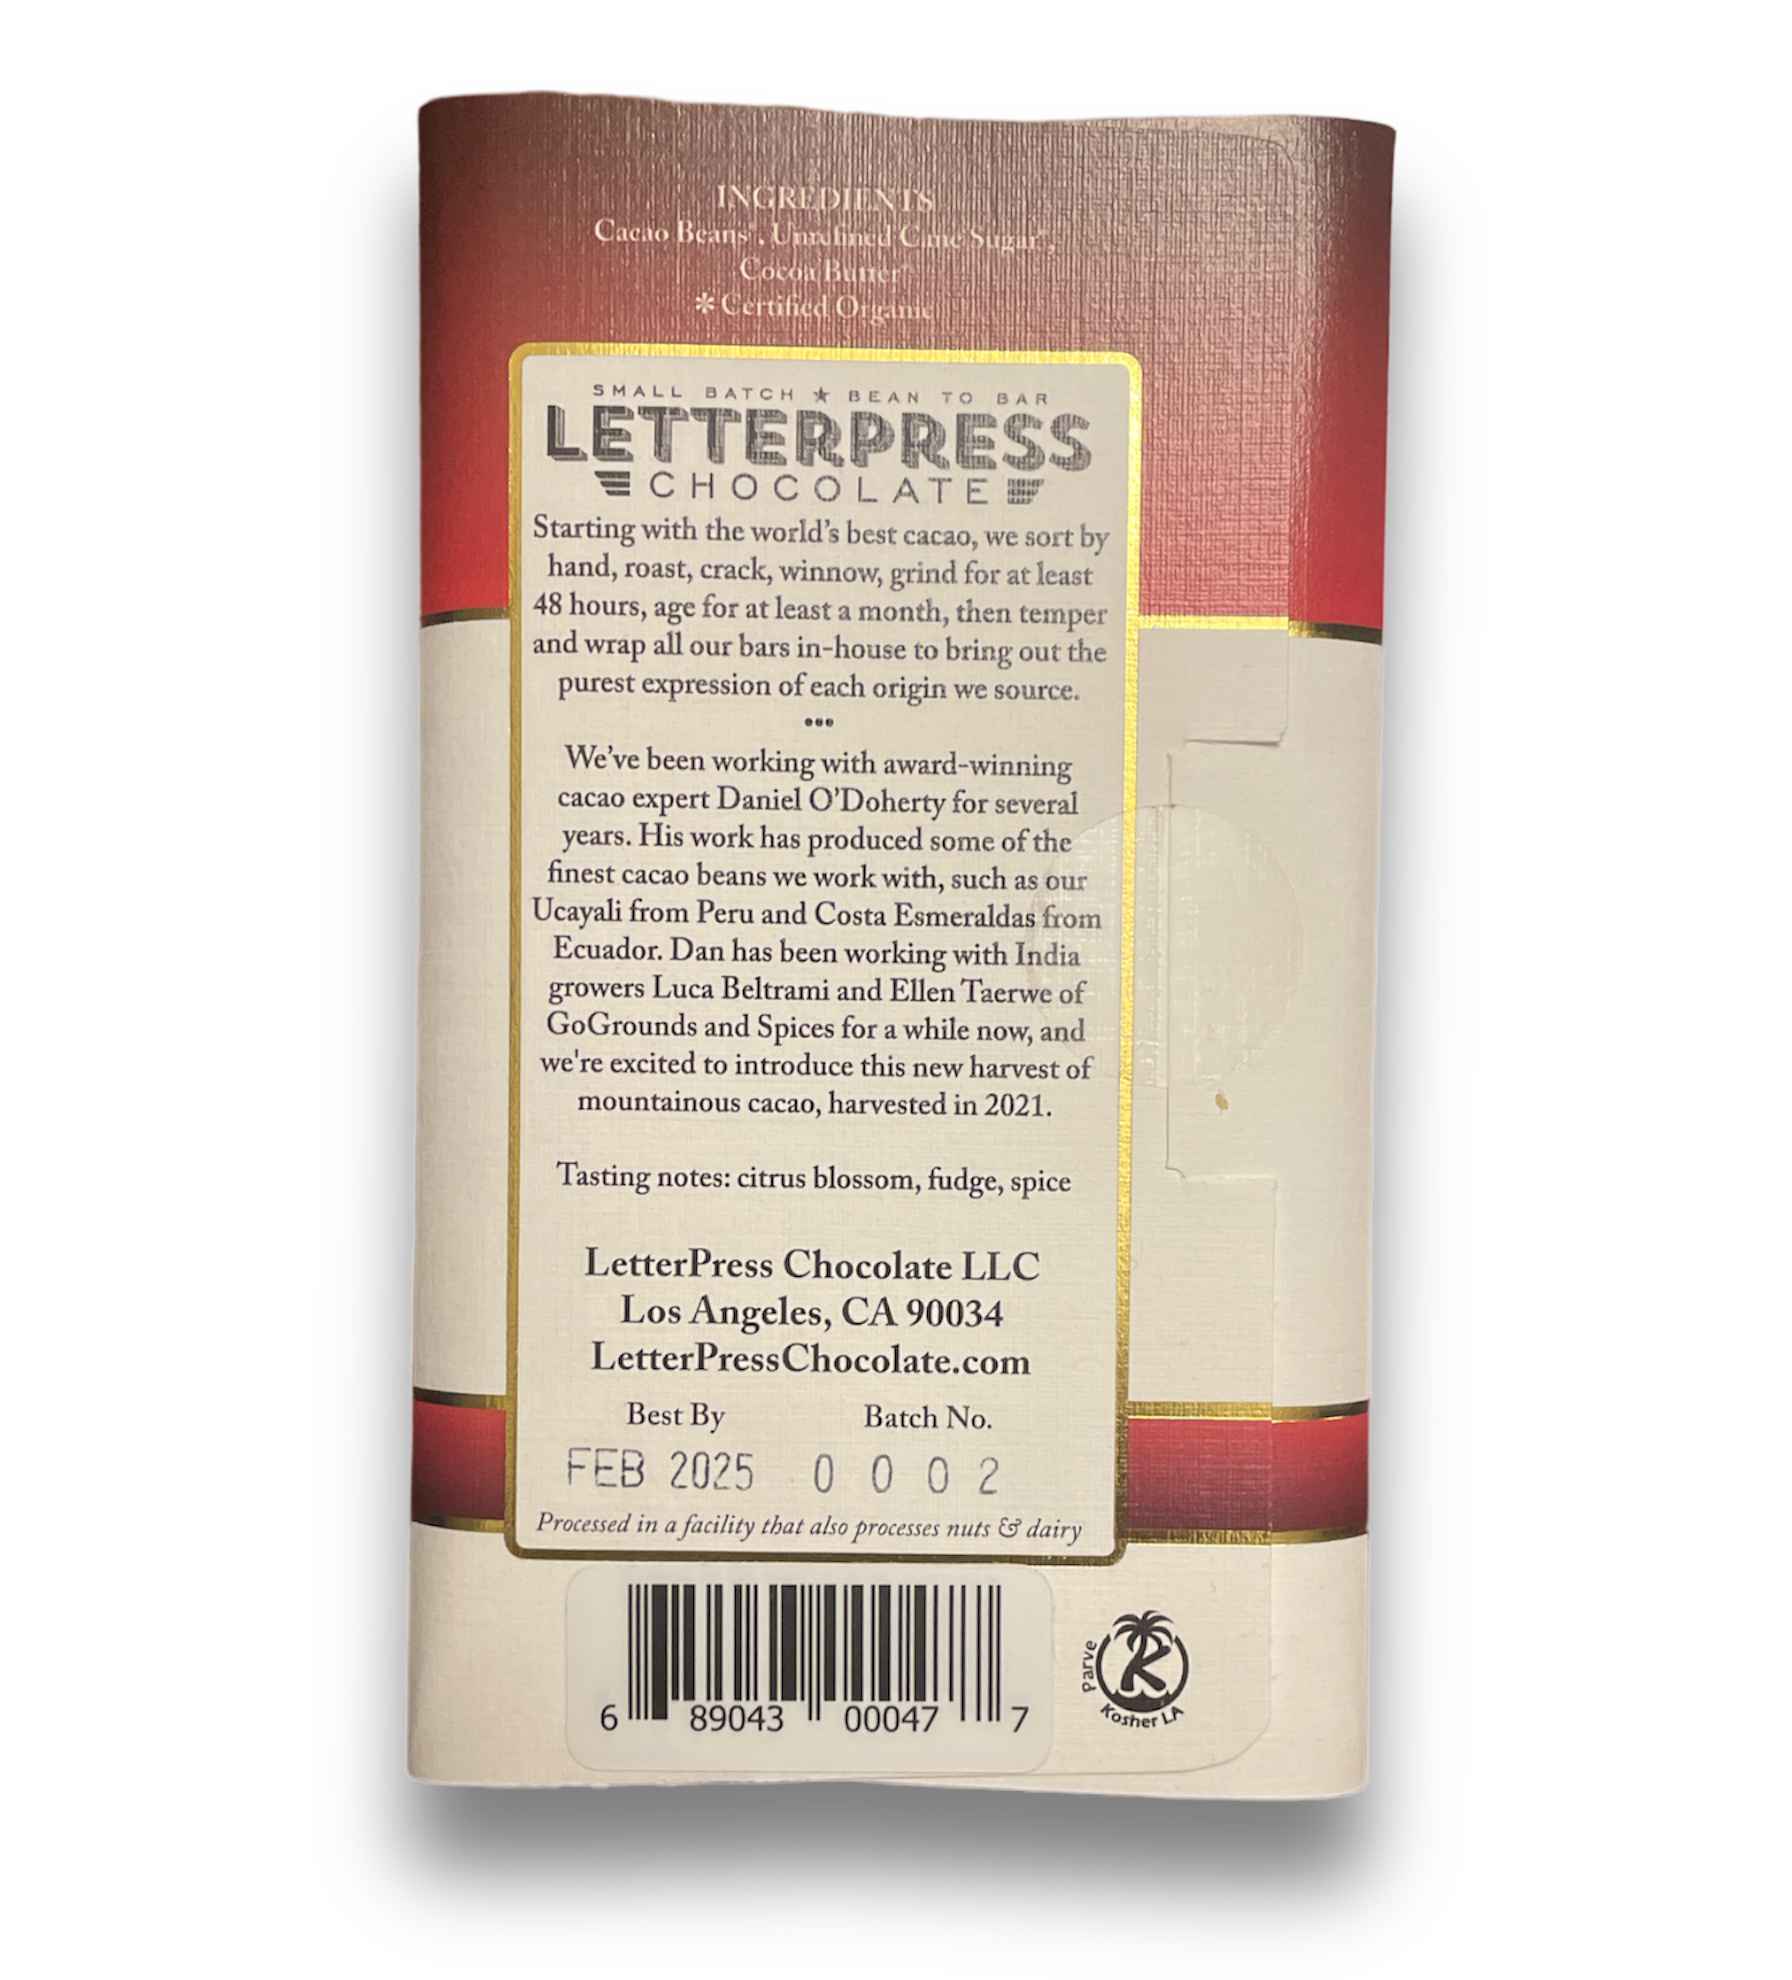 Letterpress Dark Chocolate - India (Kerala) 70%